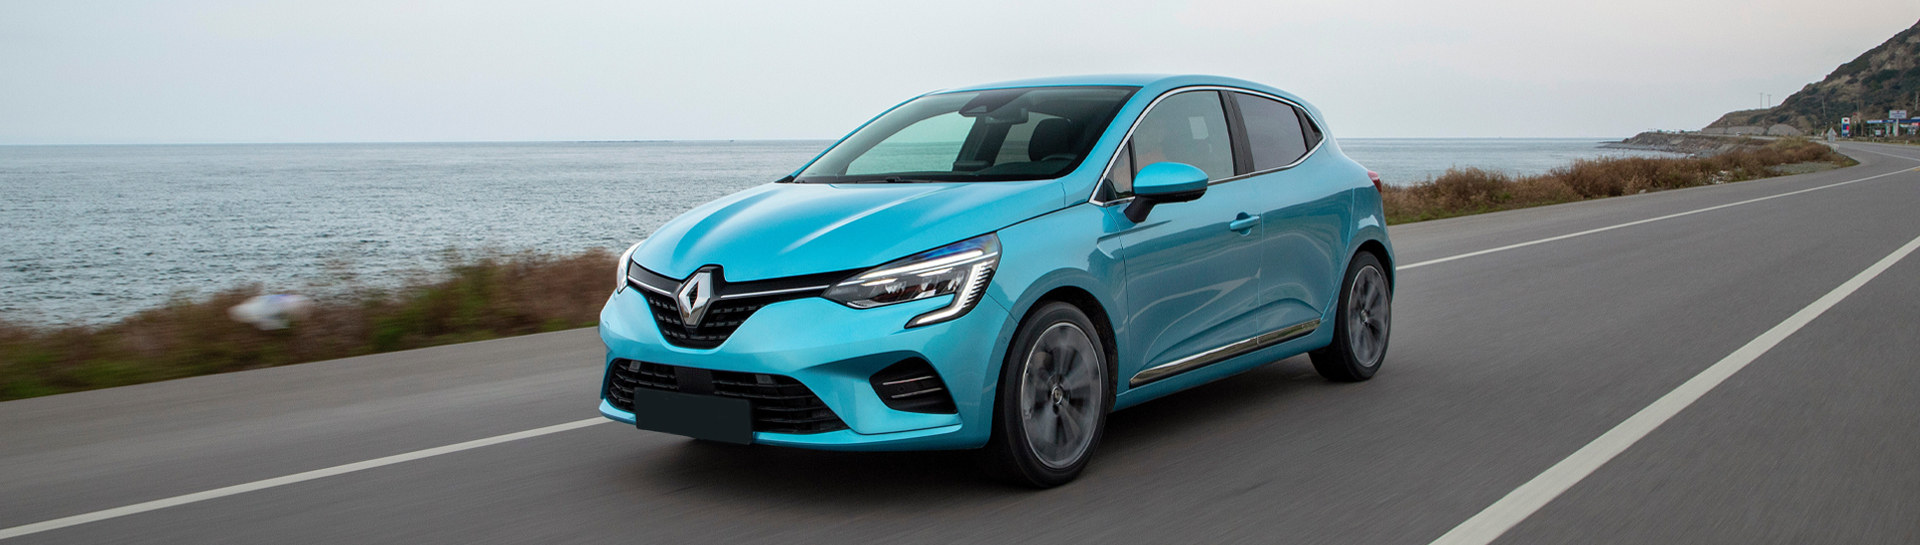 Renault Clio lidera preferência dos portugueses